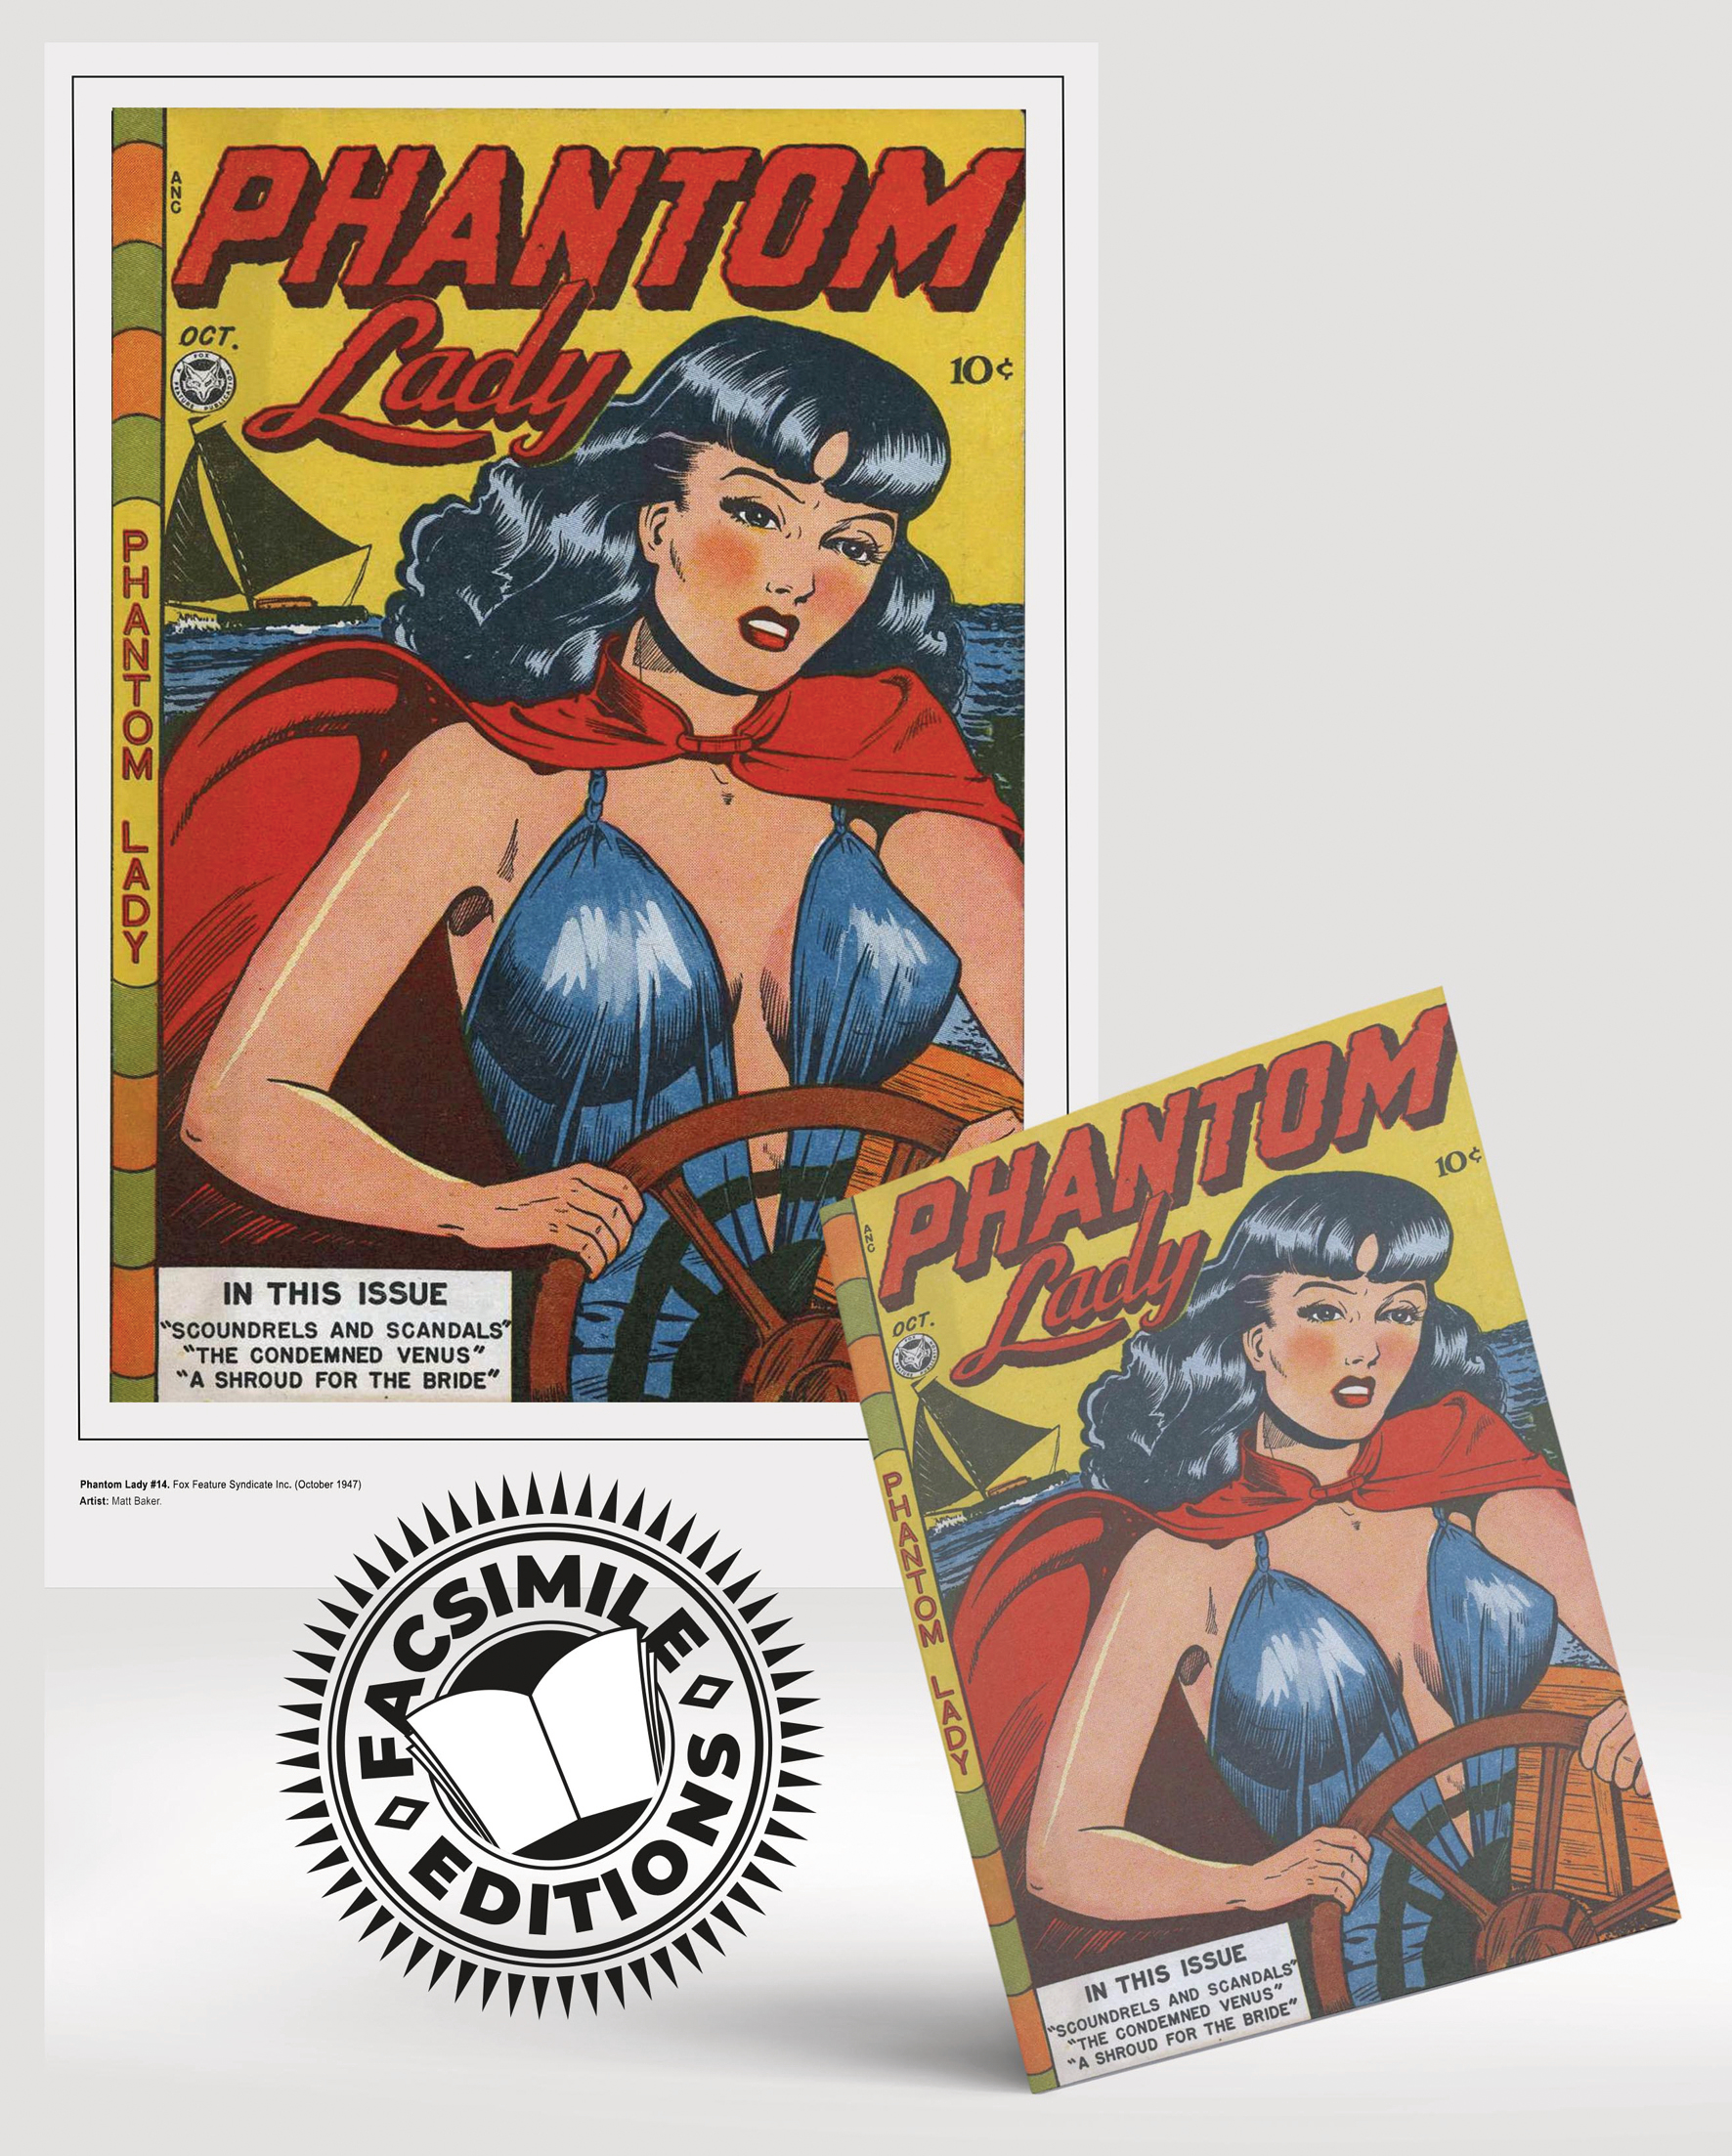 PS Artbooks Phantom Lady Facsmile Edition #14